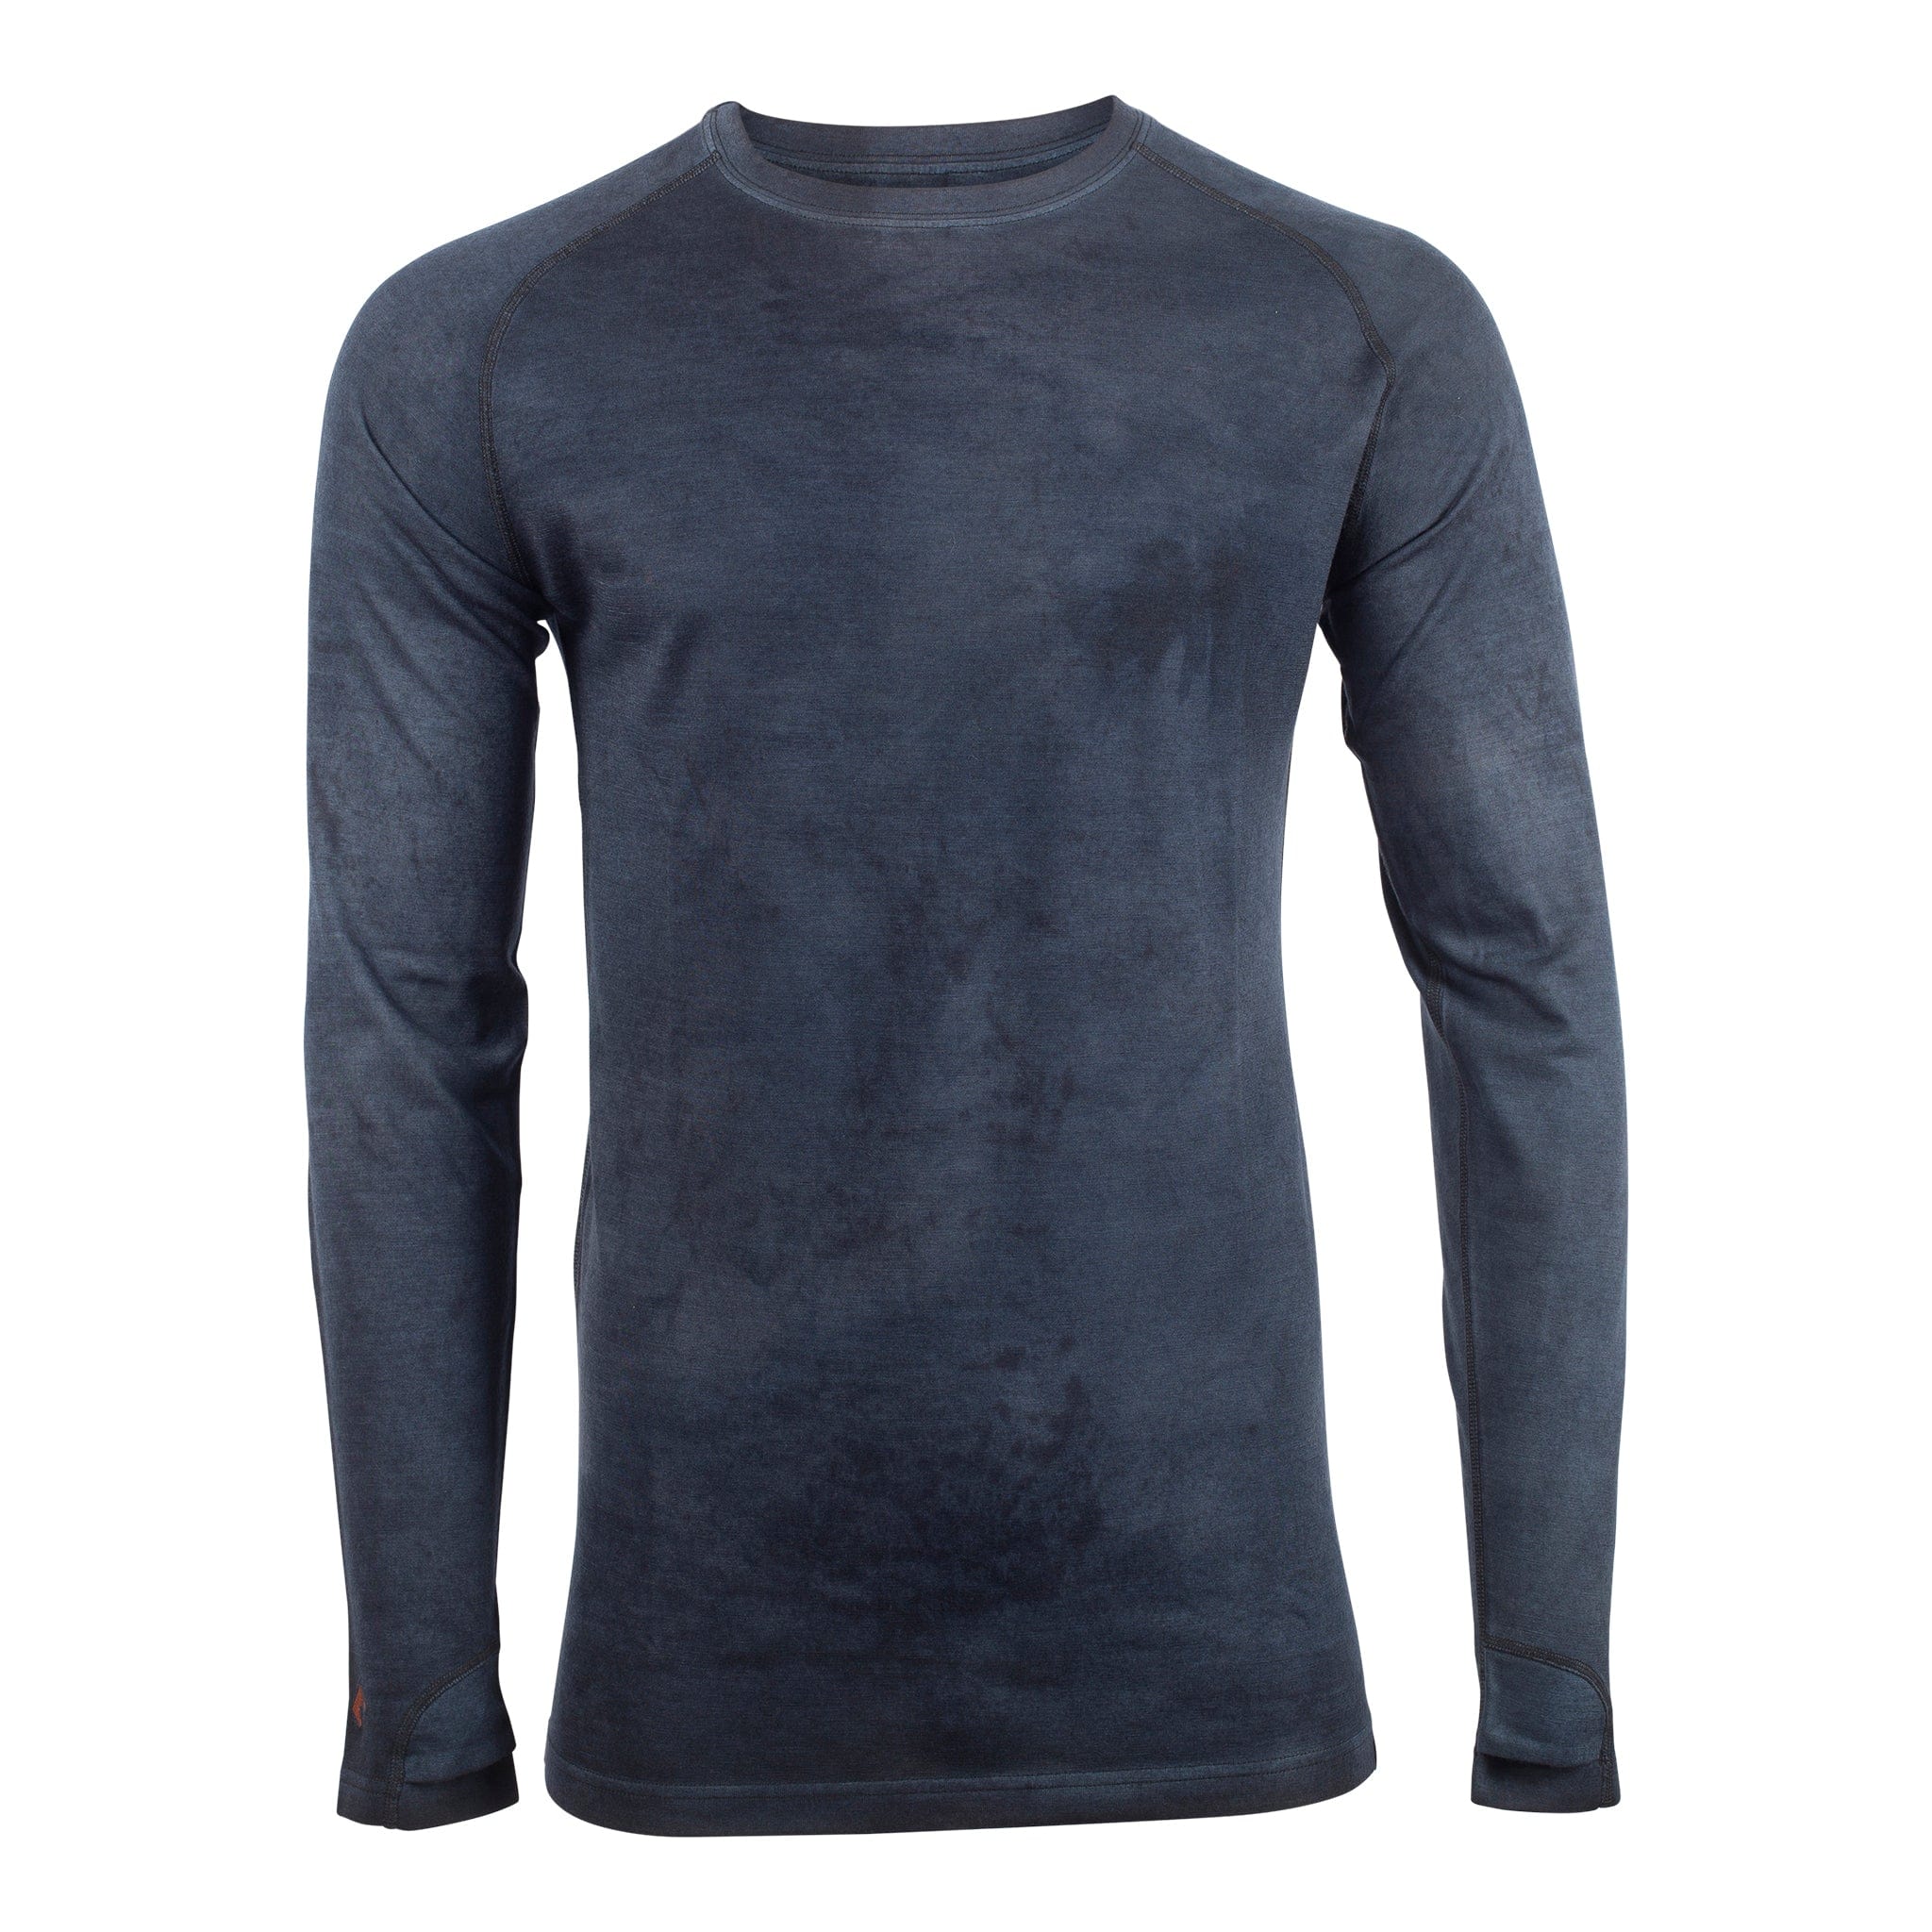 Men's Aspect Midweight Merino Wool Base Layer Long Sleeve Shirt